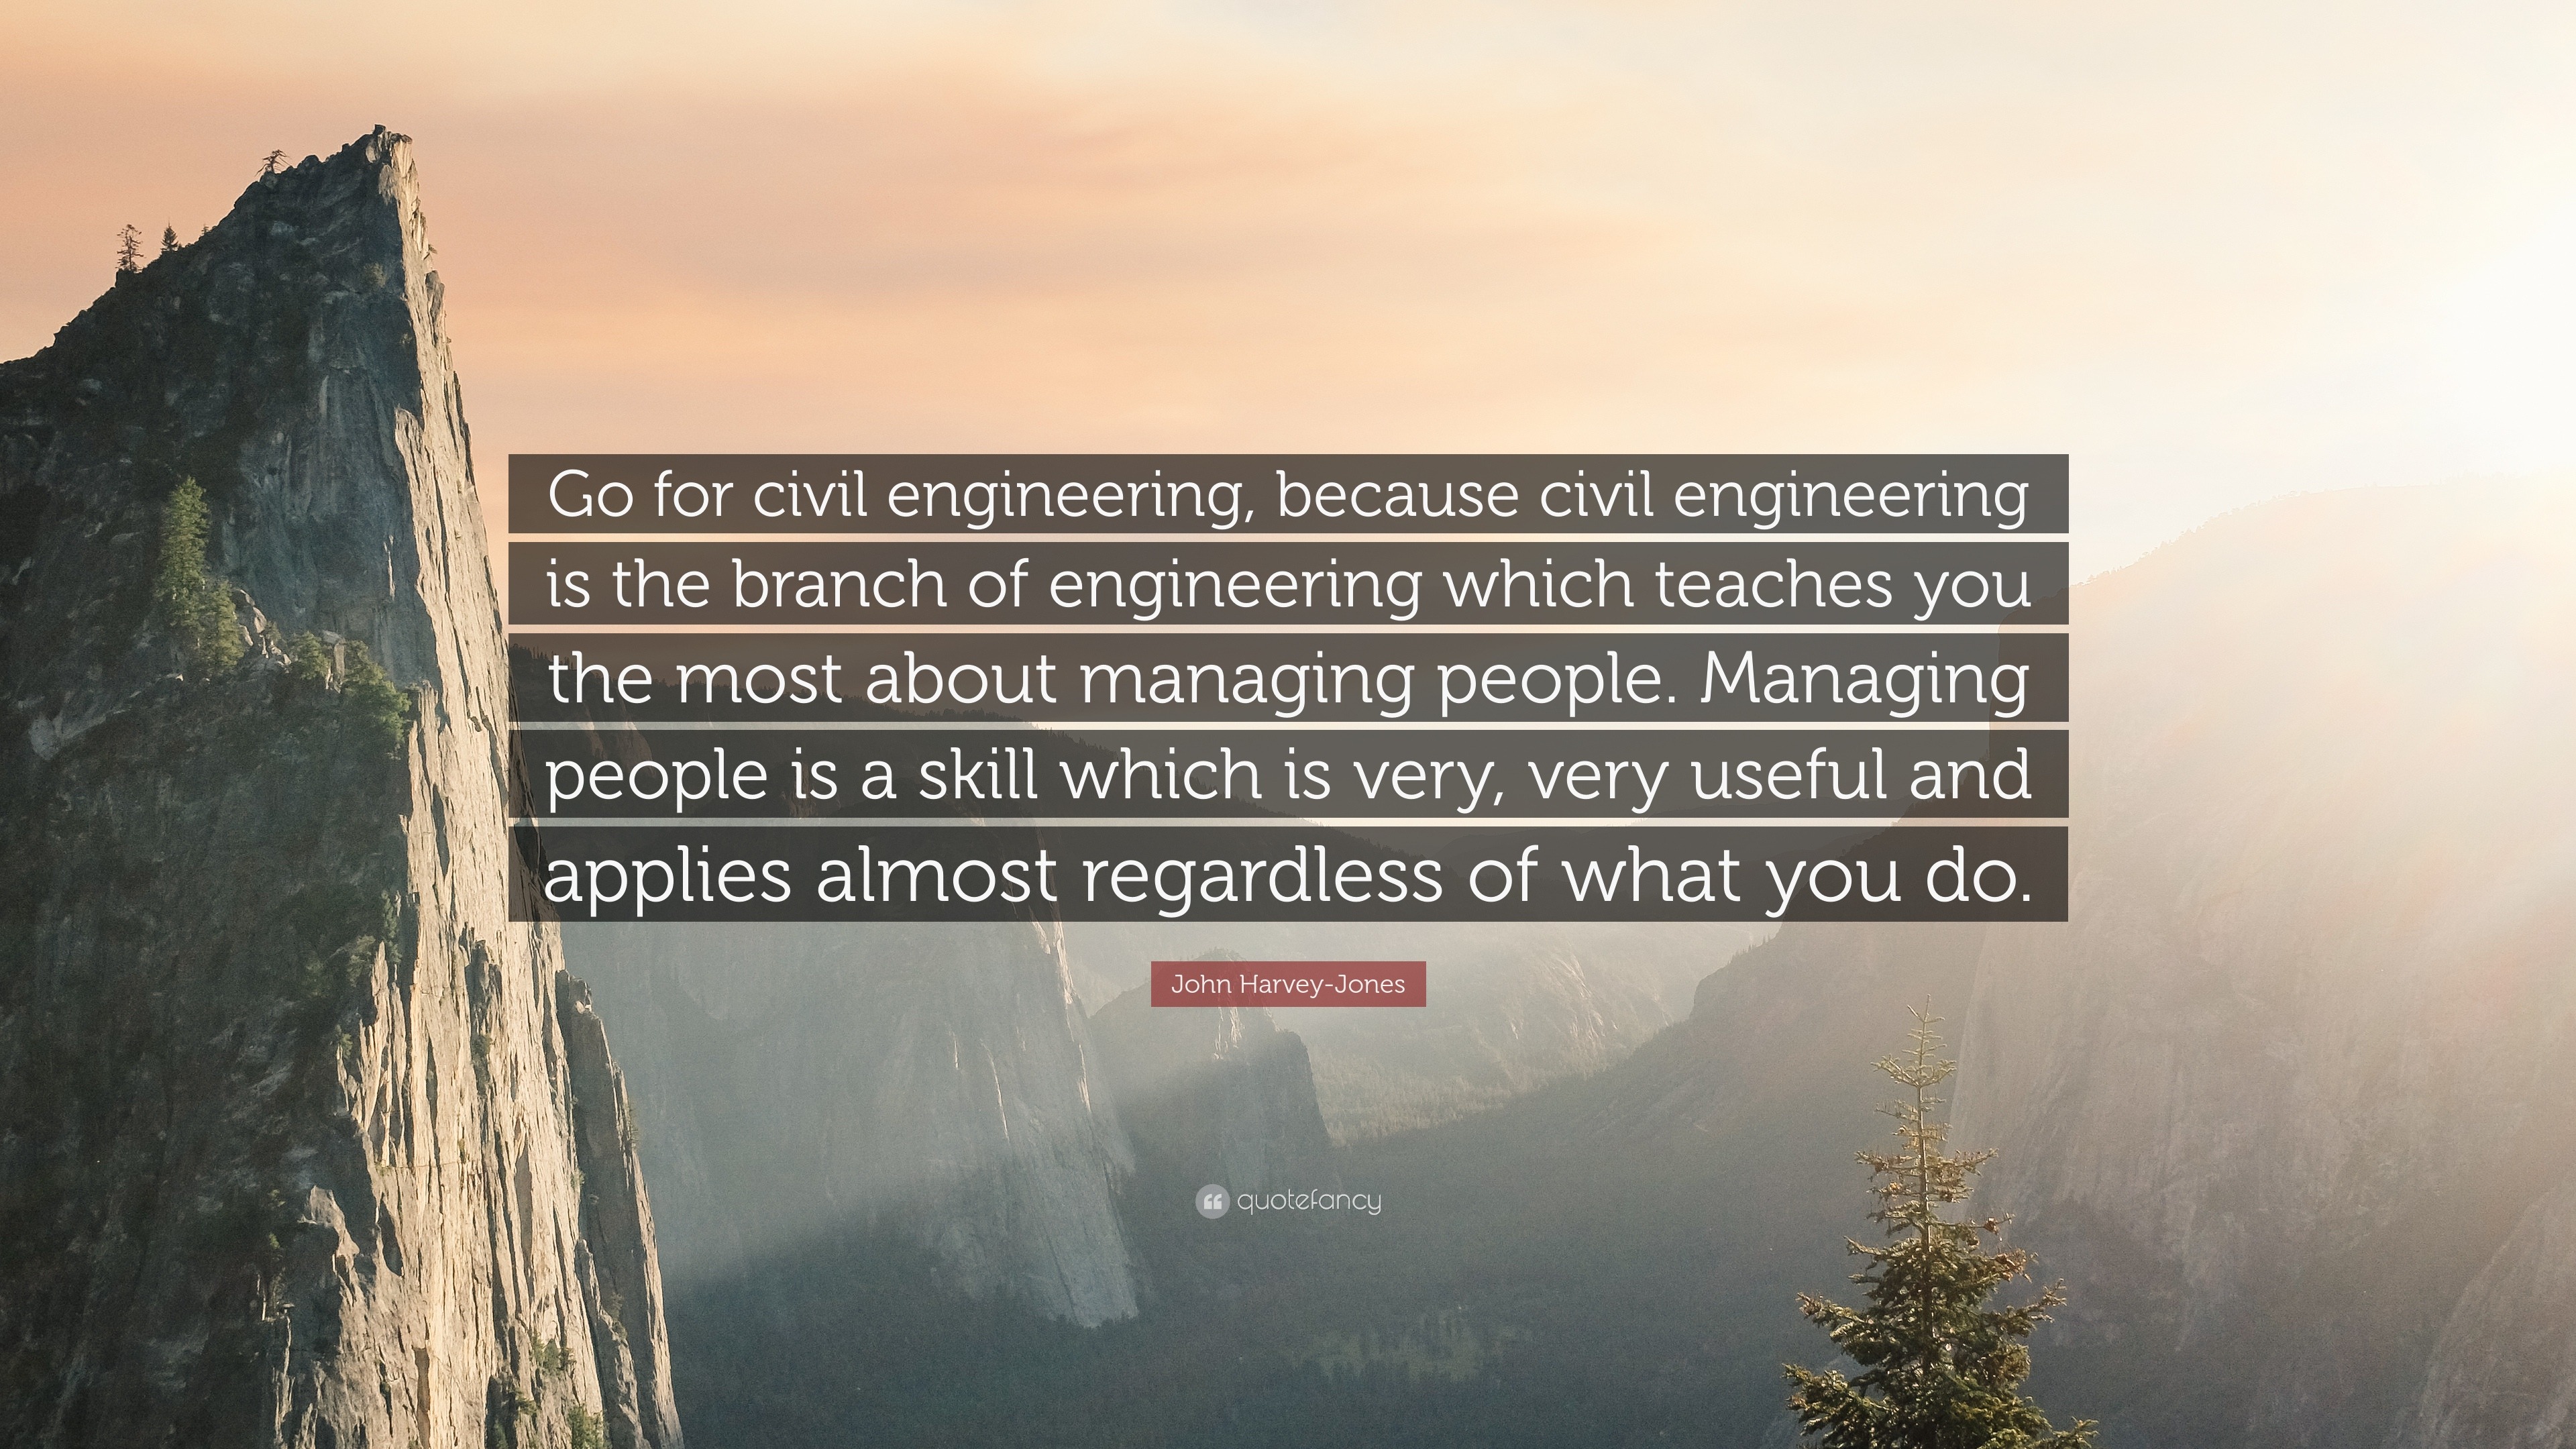 John HarveyJones Quote “Go for civil engineering